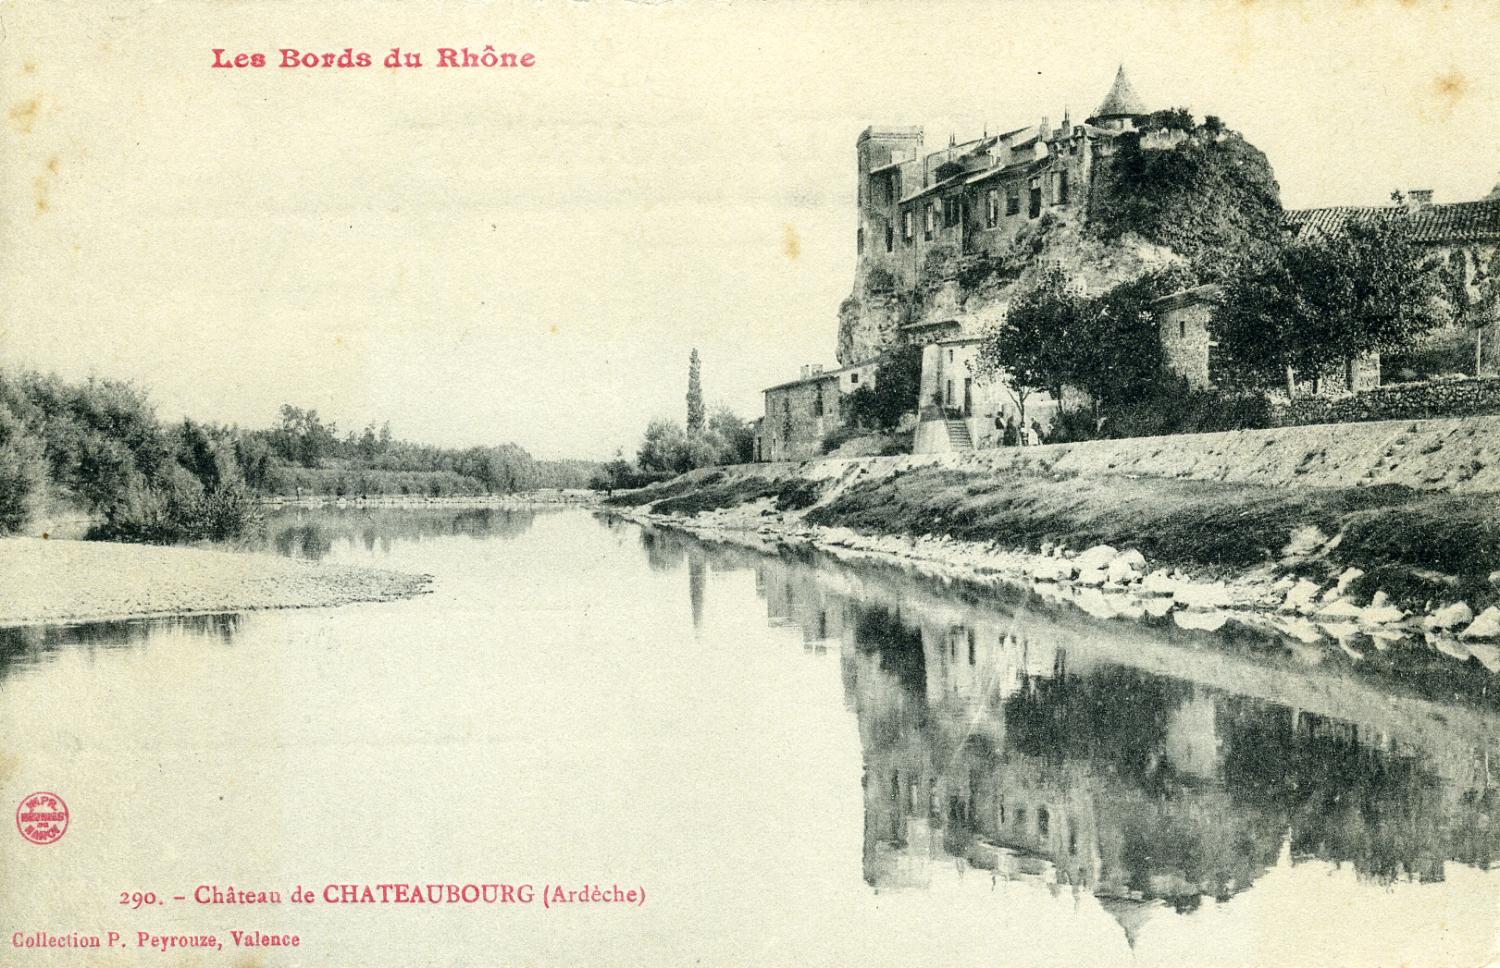 Les bords du Rhône